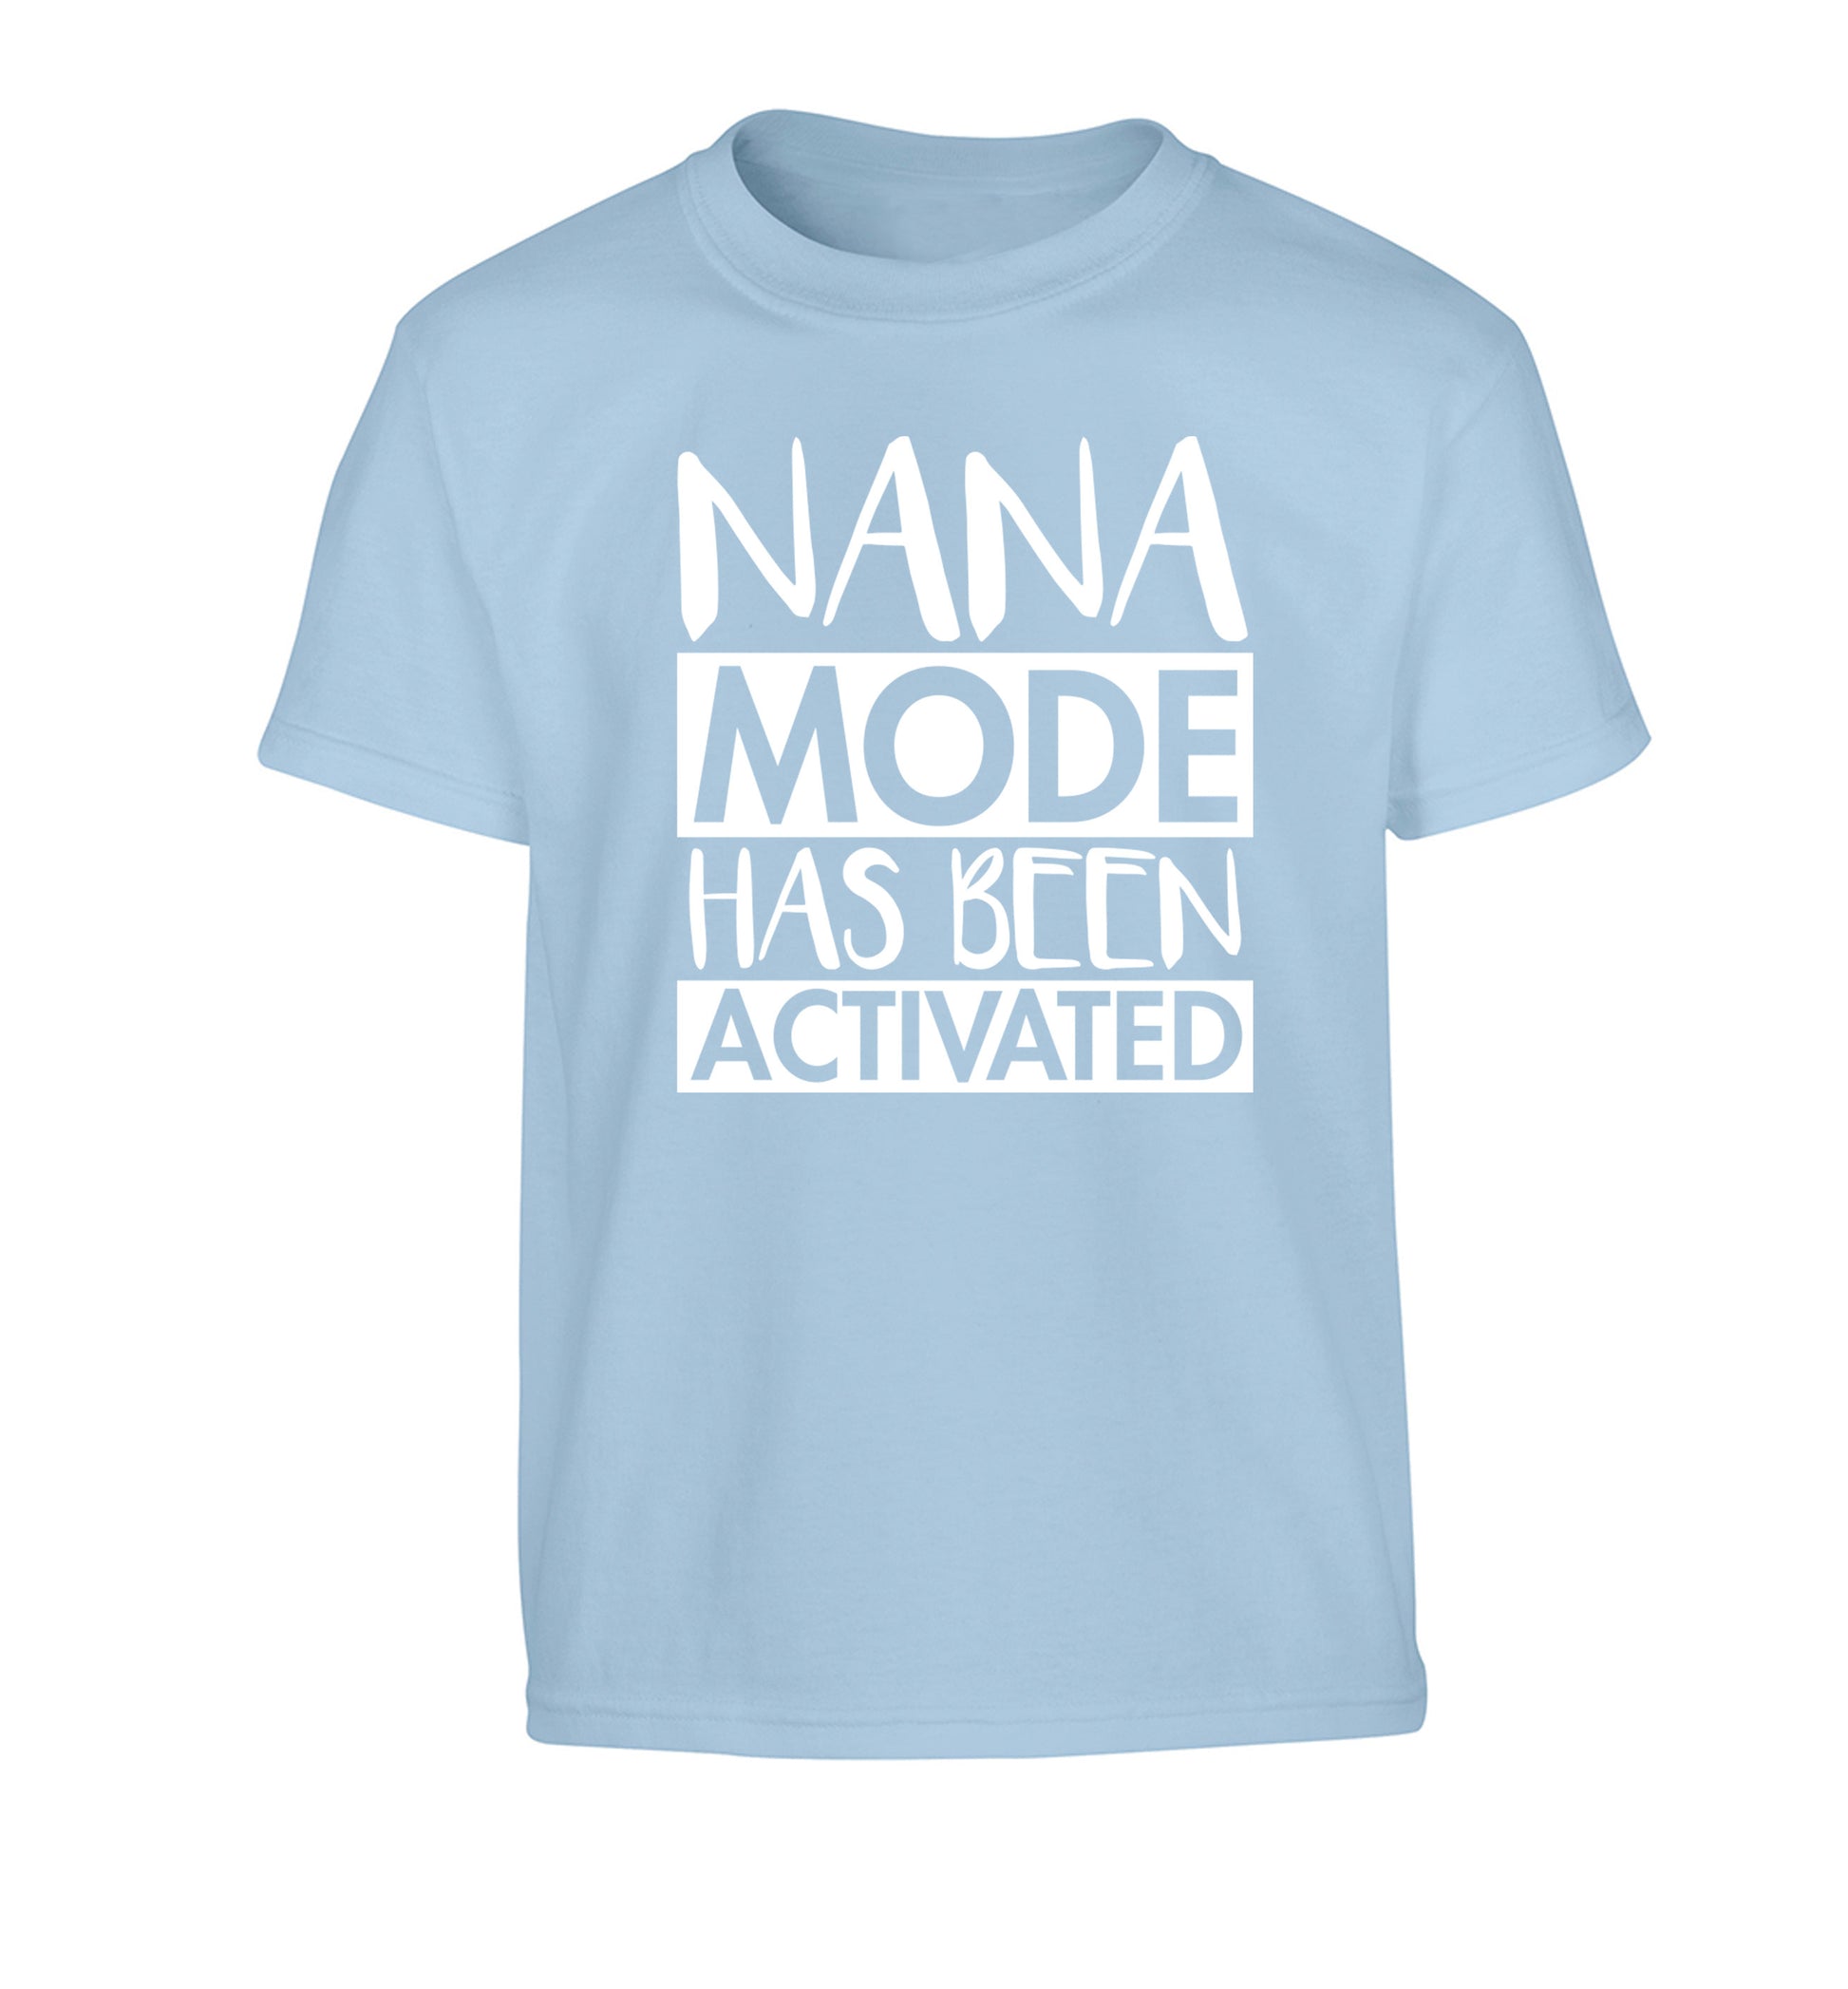 Nana mode activated Children's light blue Tshirt 12-14 Years